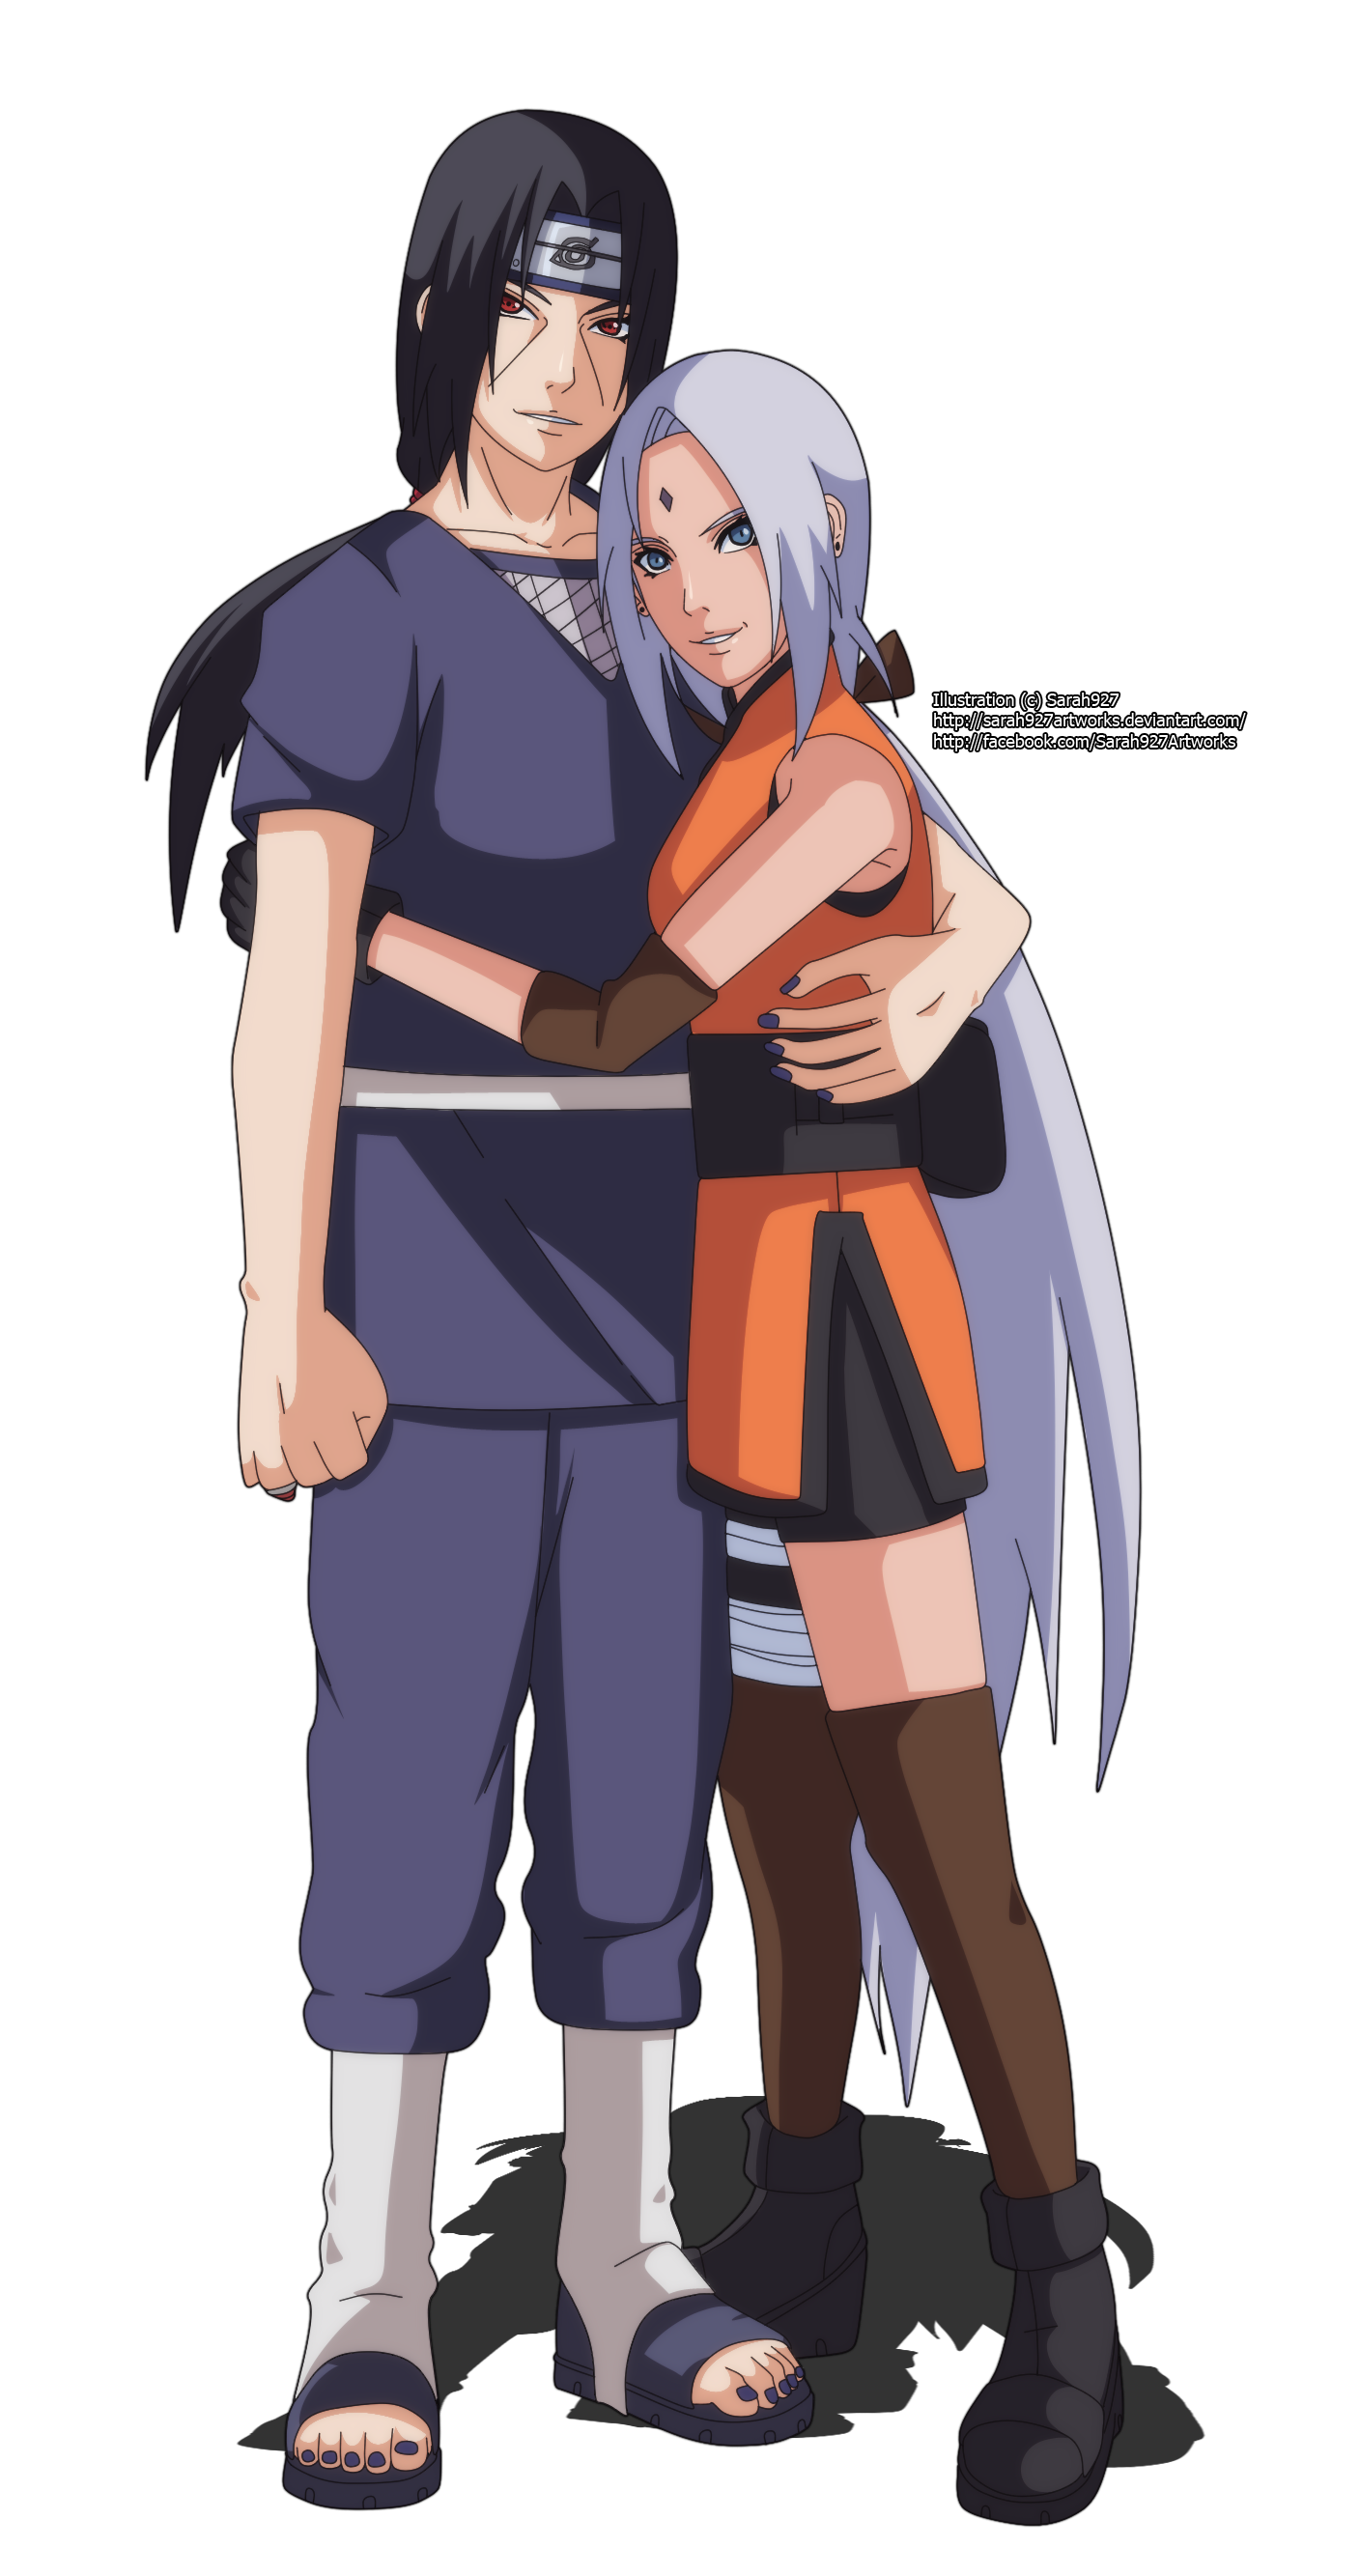 Couples on Anime-Sanctum - DeviantArt